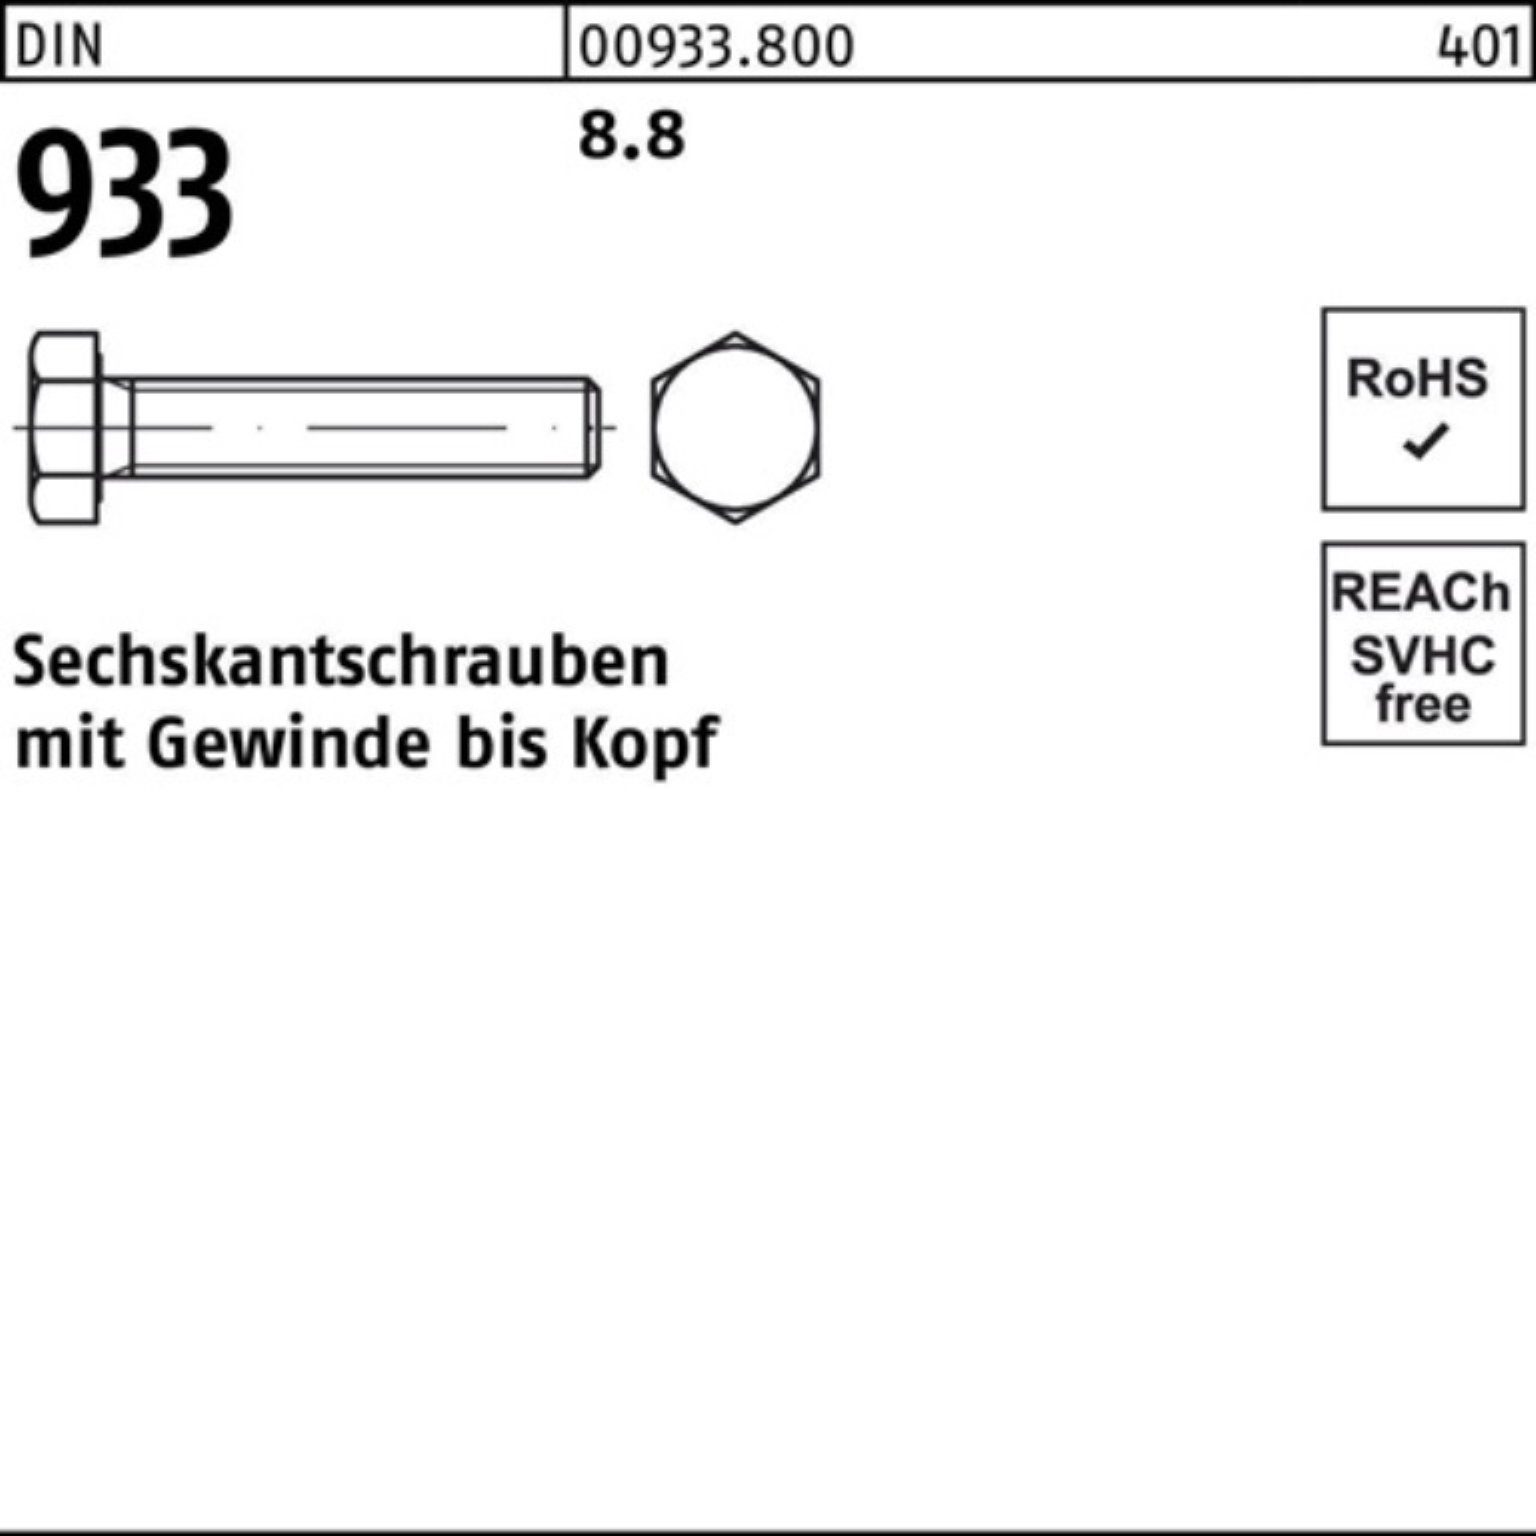 Reyher Sechskantschraube 200er VG Pack 933 933 75 DIN M8x Sechskantschraube Stück 200 8.8 DIN